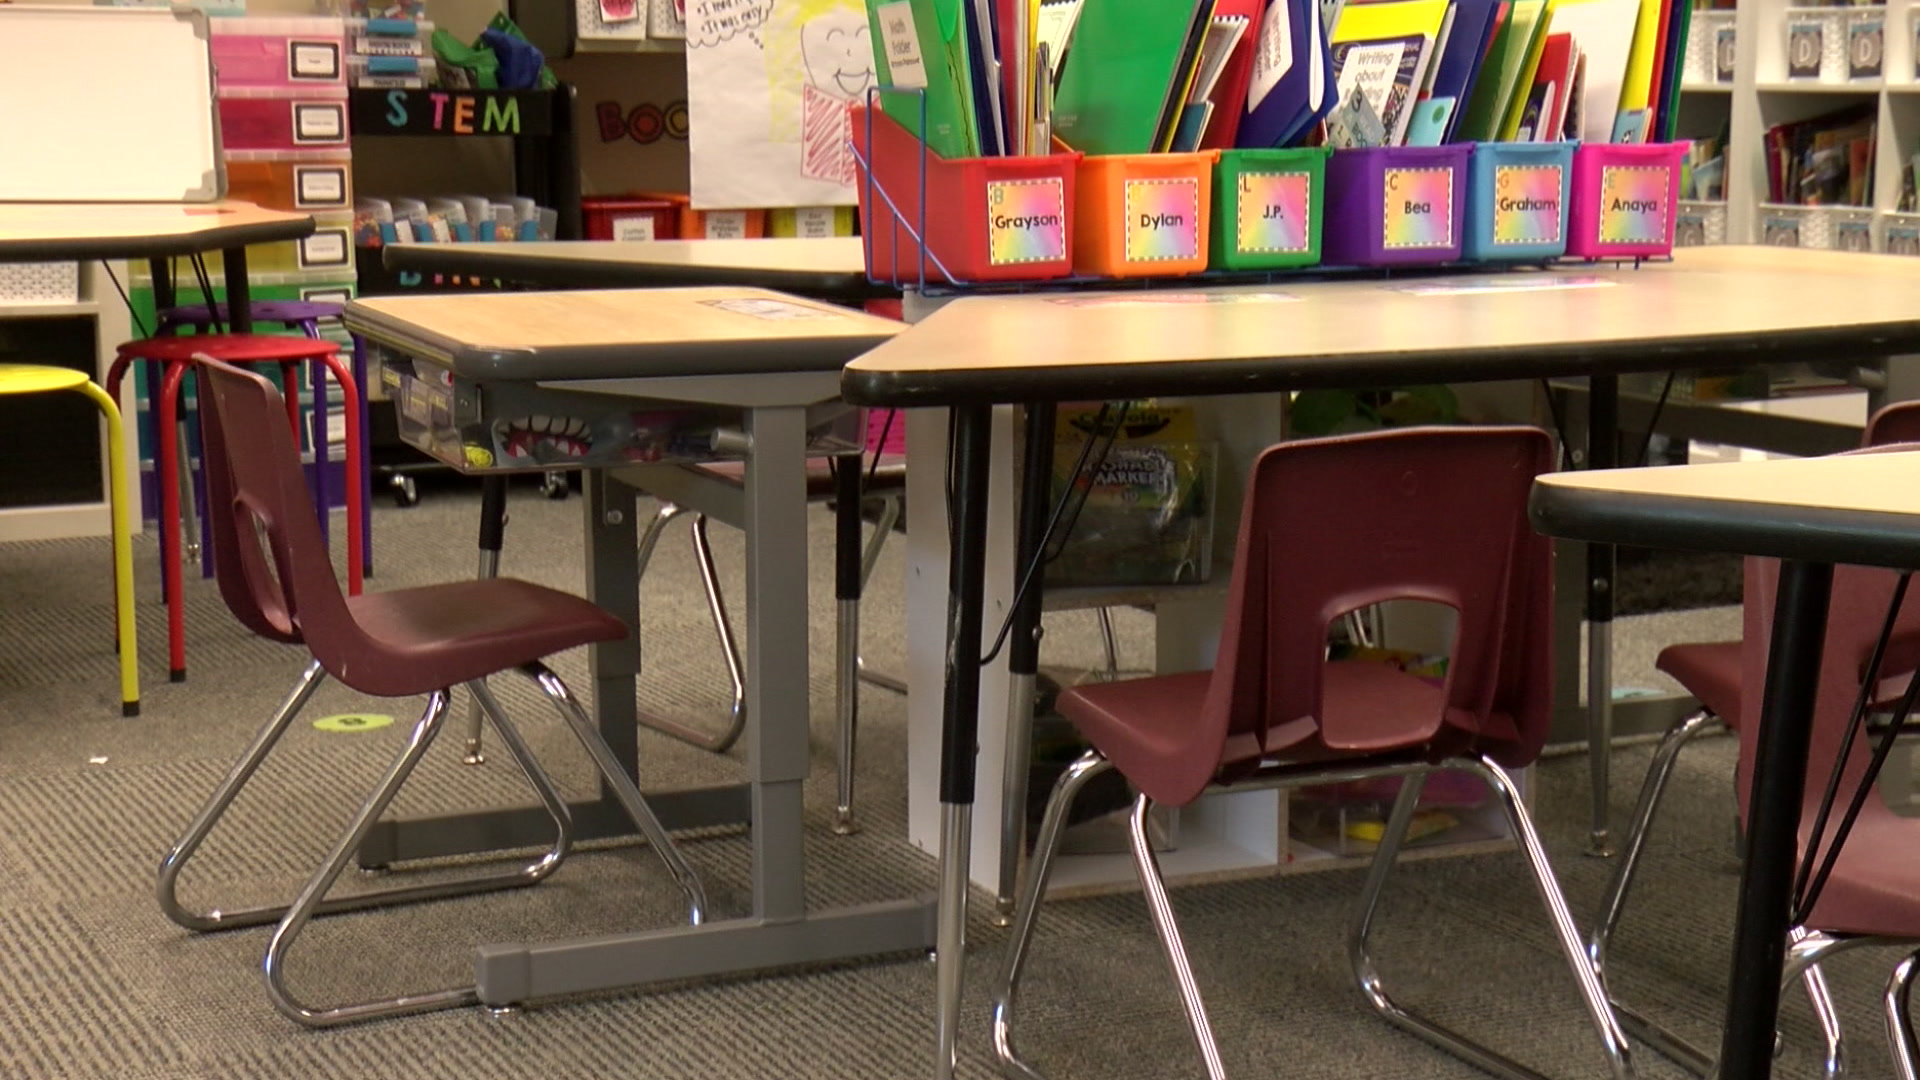 Parents needed during substitute teacher shortage